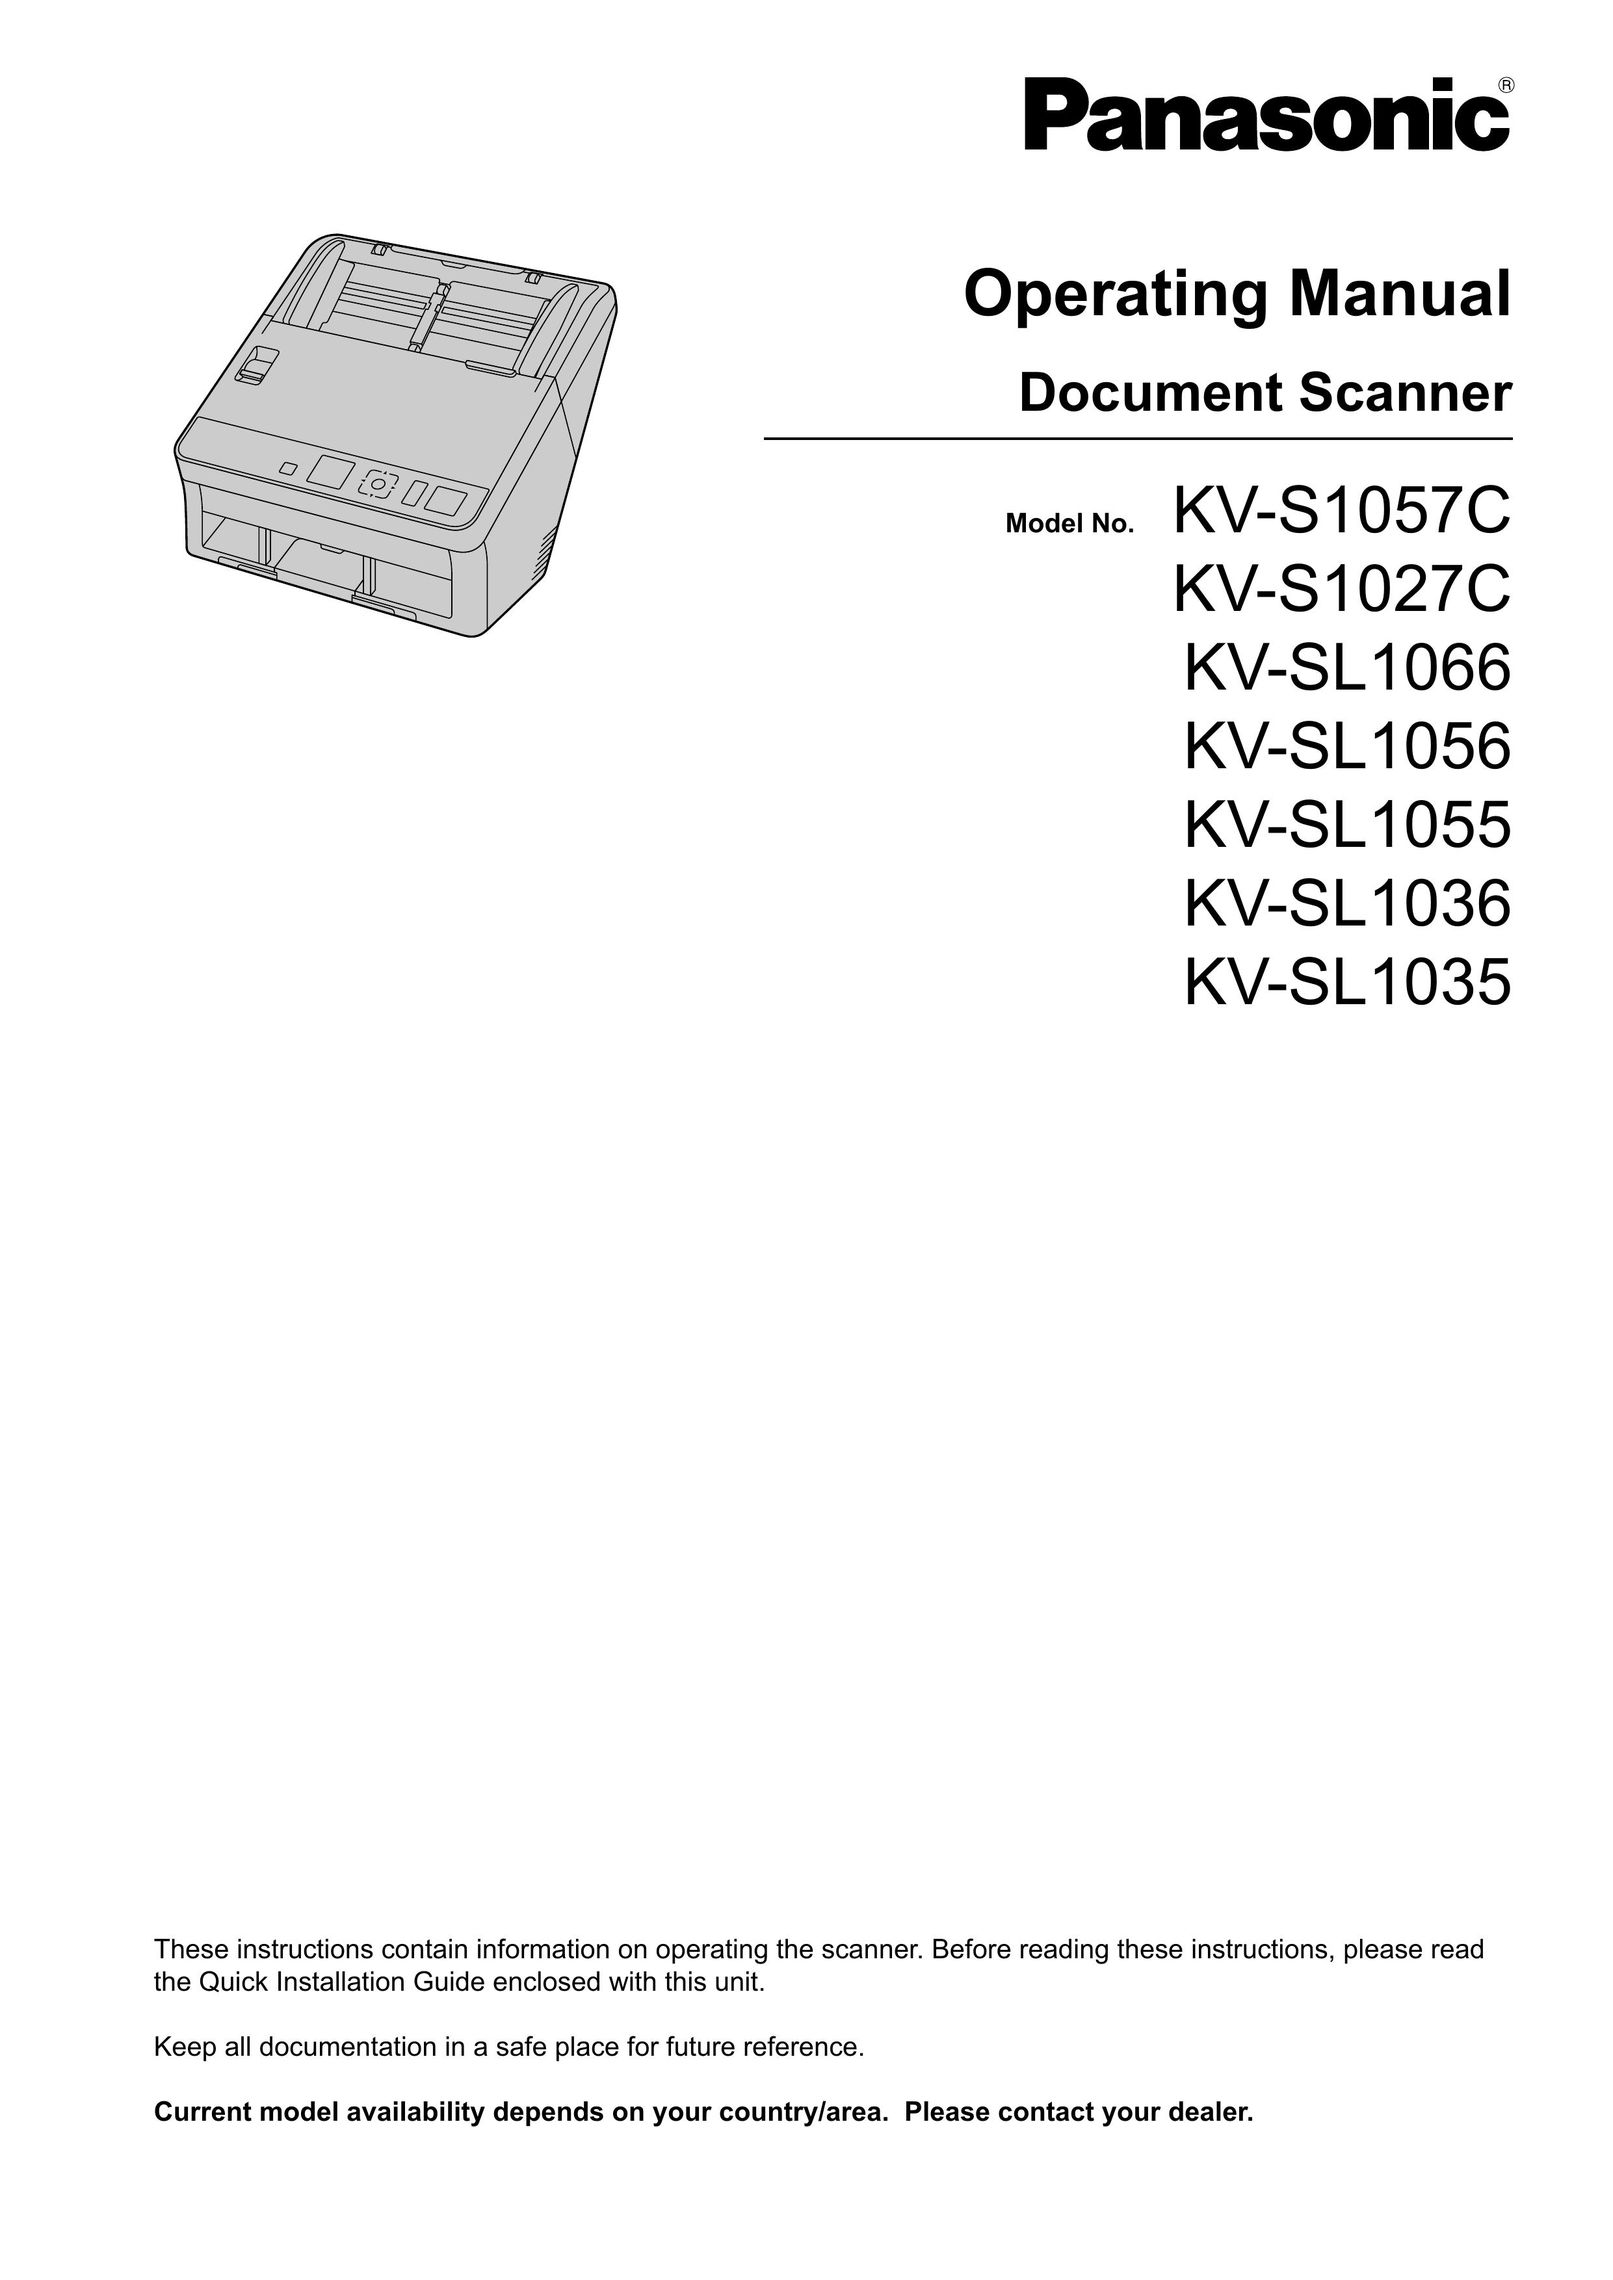 Panasonic KV-SL1035 Scanner User Manual